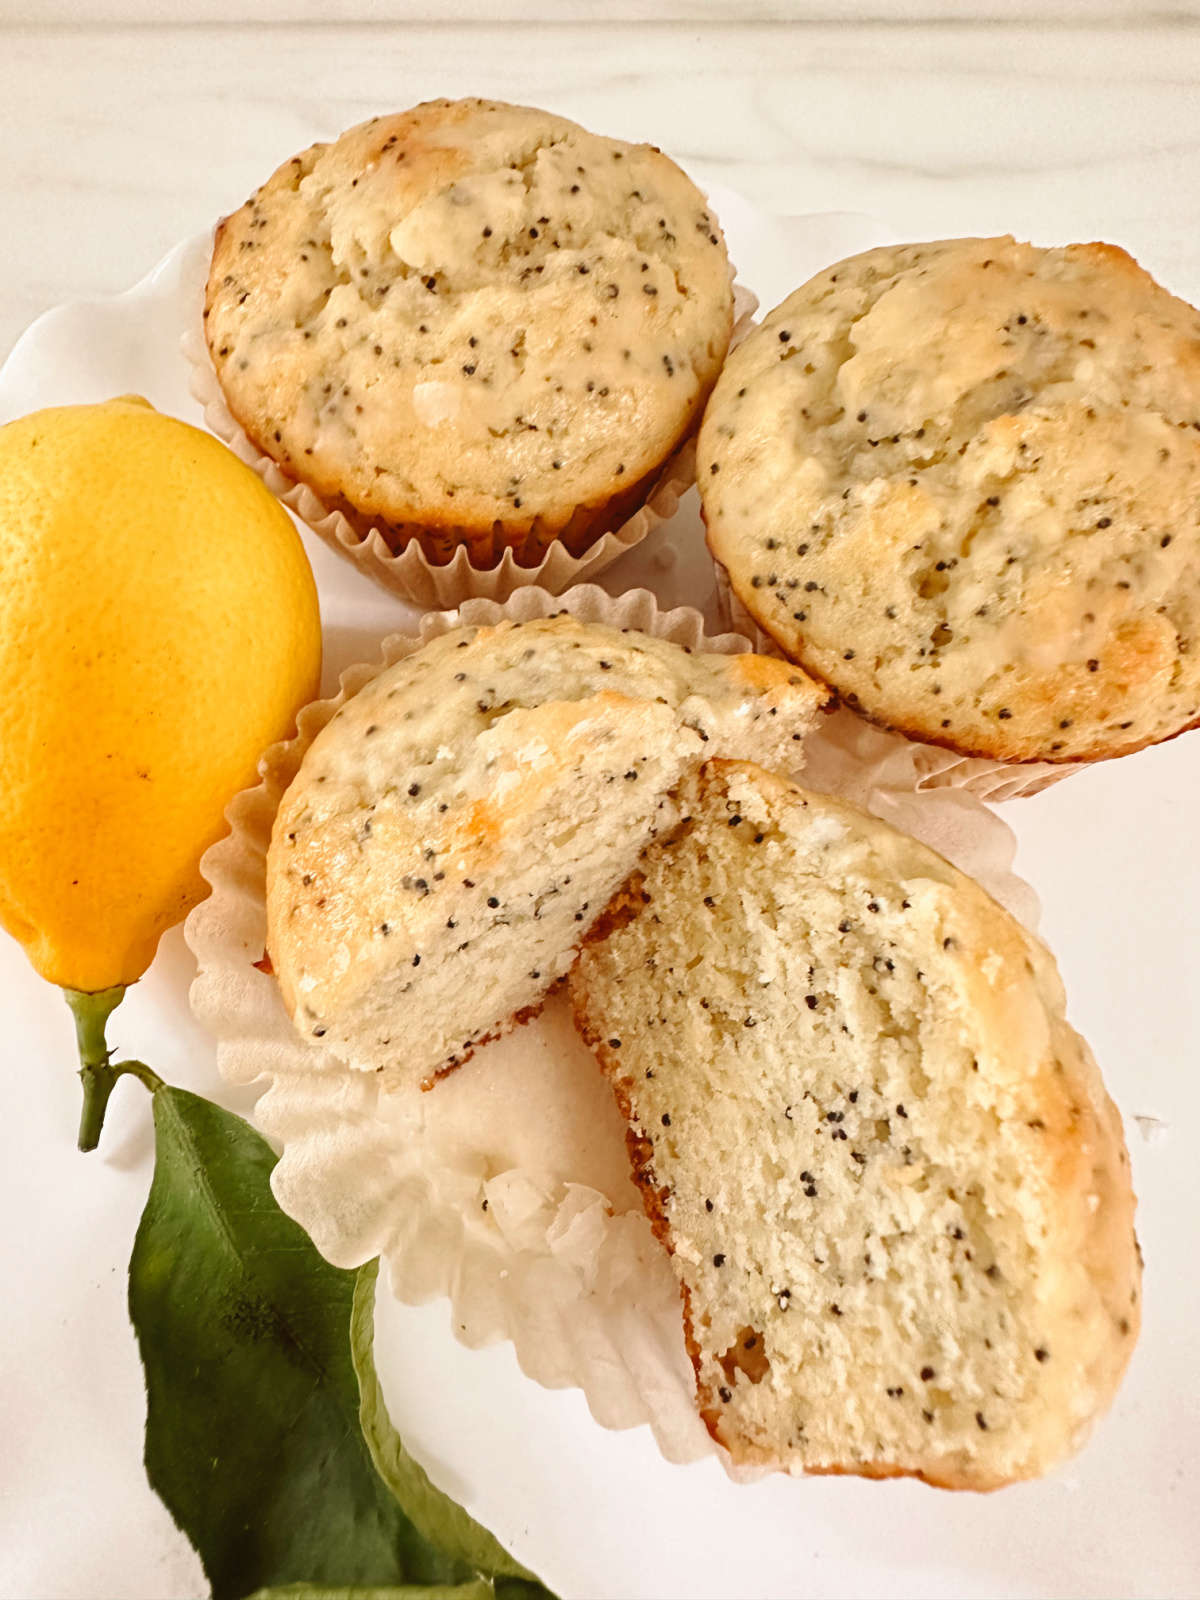 Lemon Poppyseed muffins on a plate.